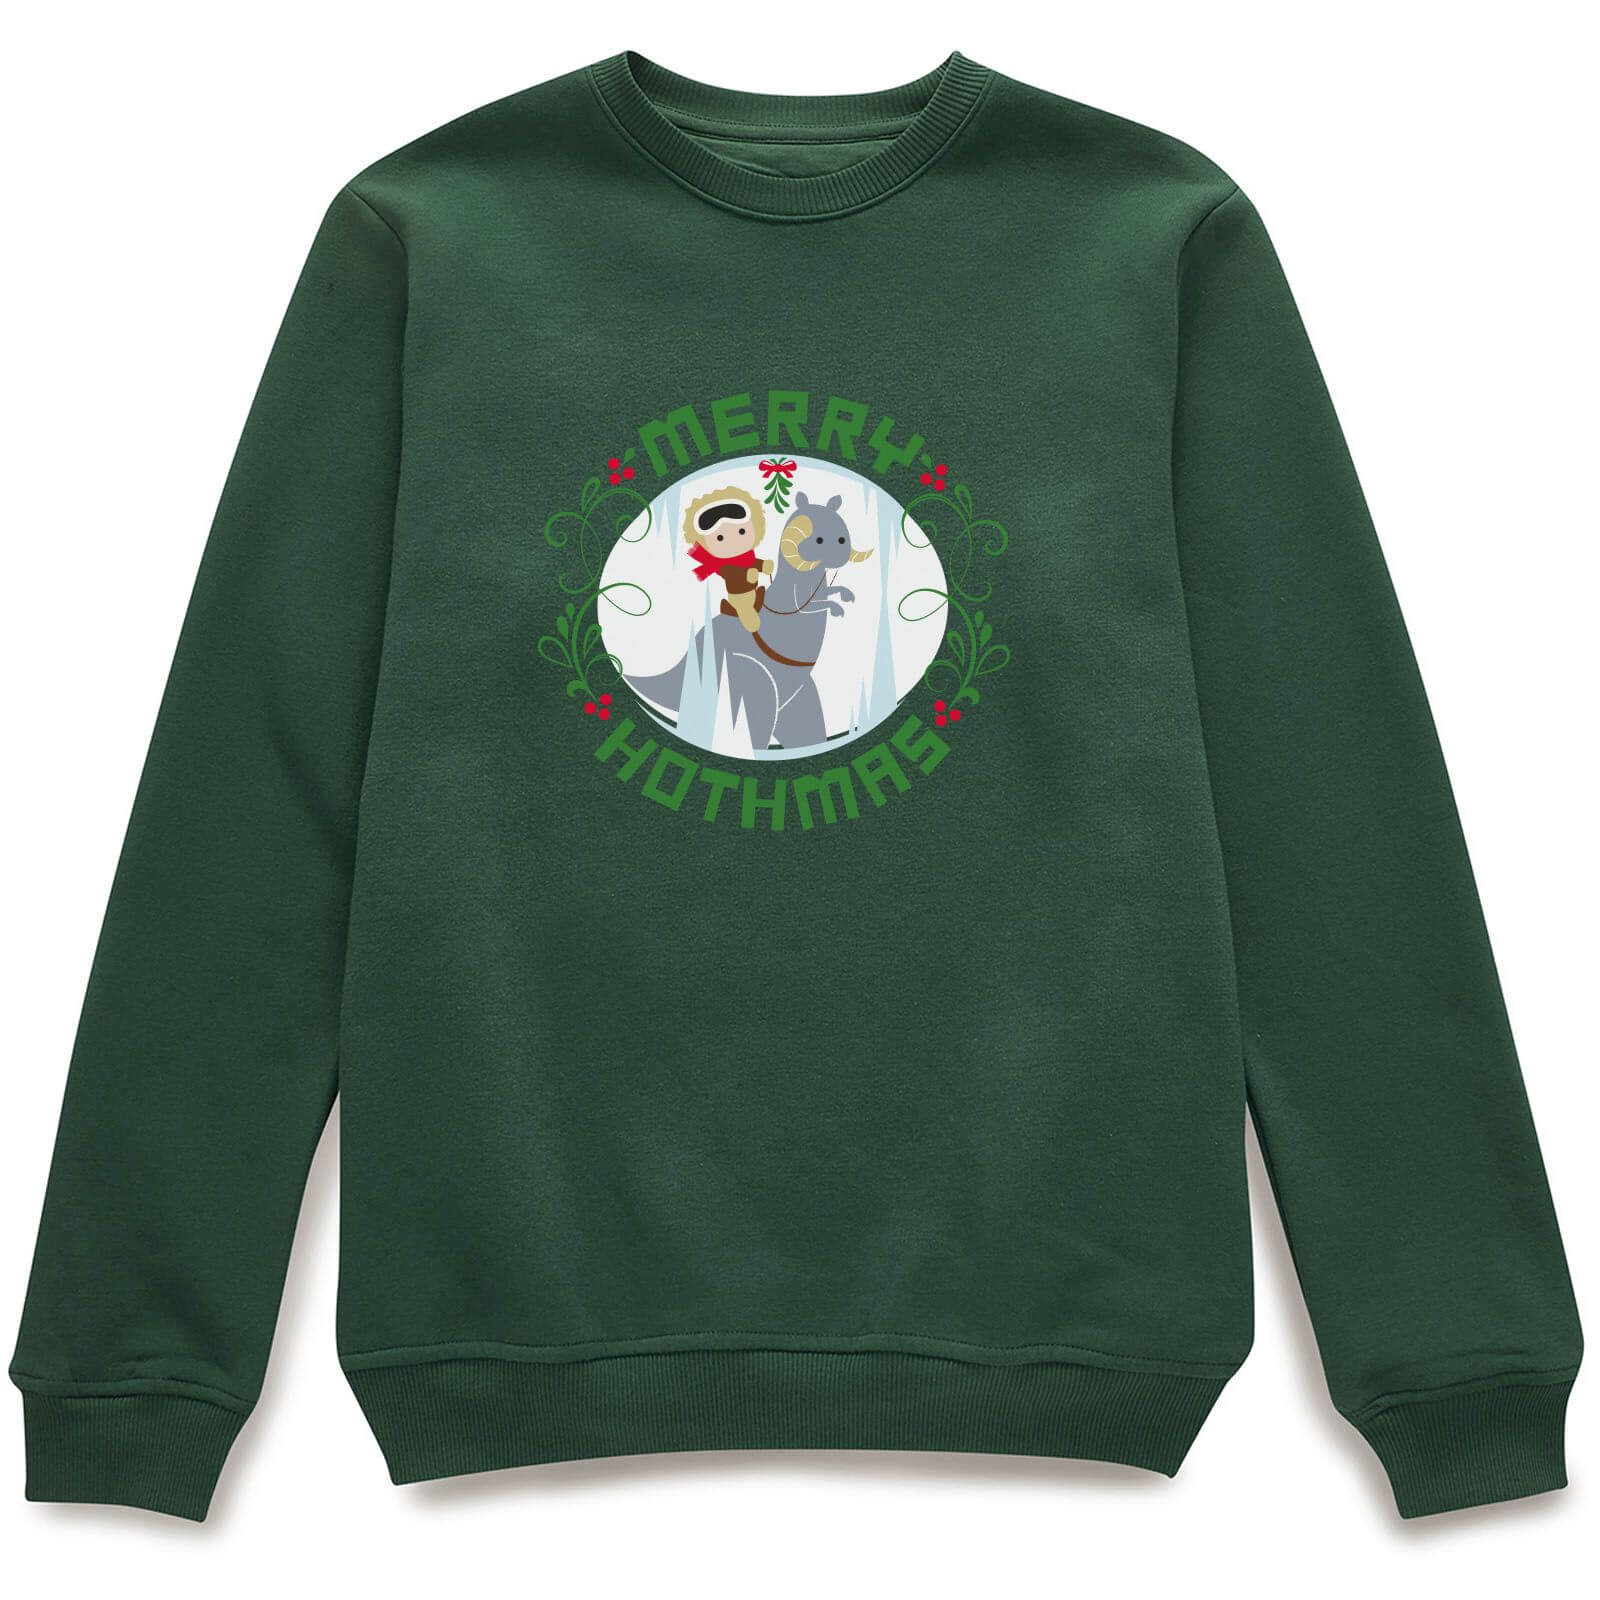 Star Wars Merry Hothmas Christmas Sweatshirt - Forest Green - L - Forest Green